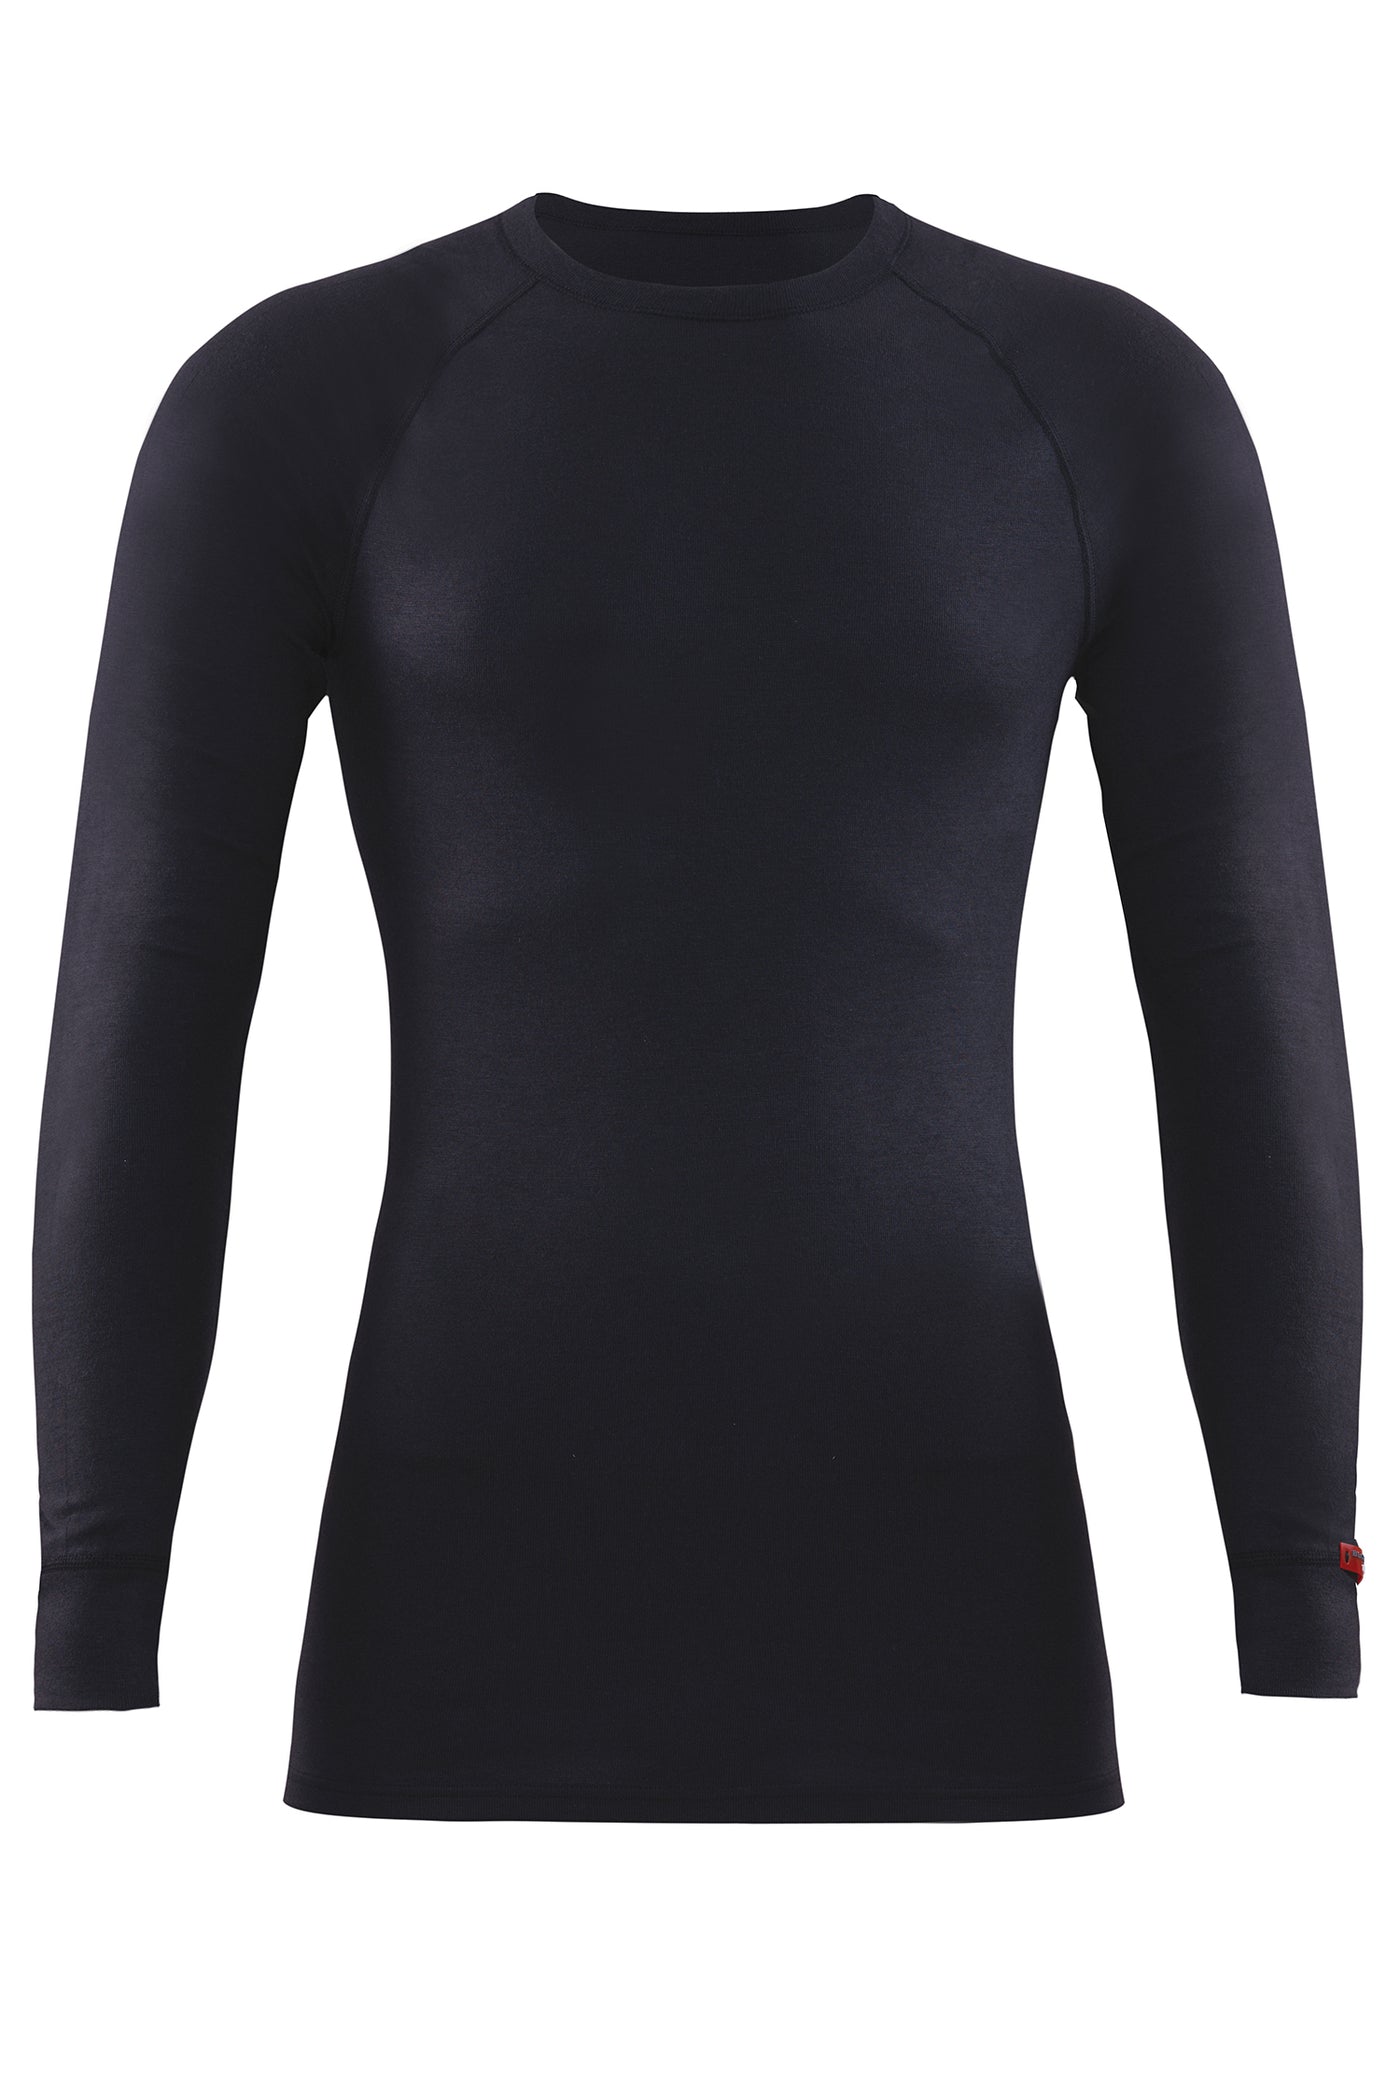 blackspade-Men's thermal long sleeve t-shirt-9259, level-2-underwear-black